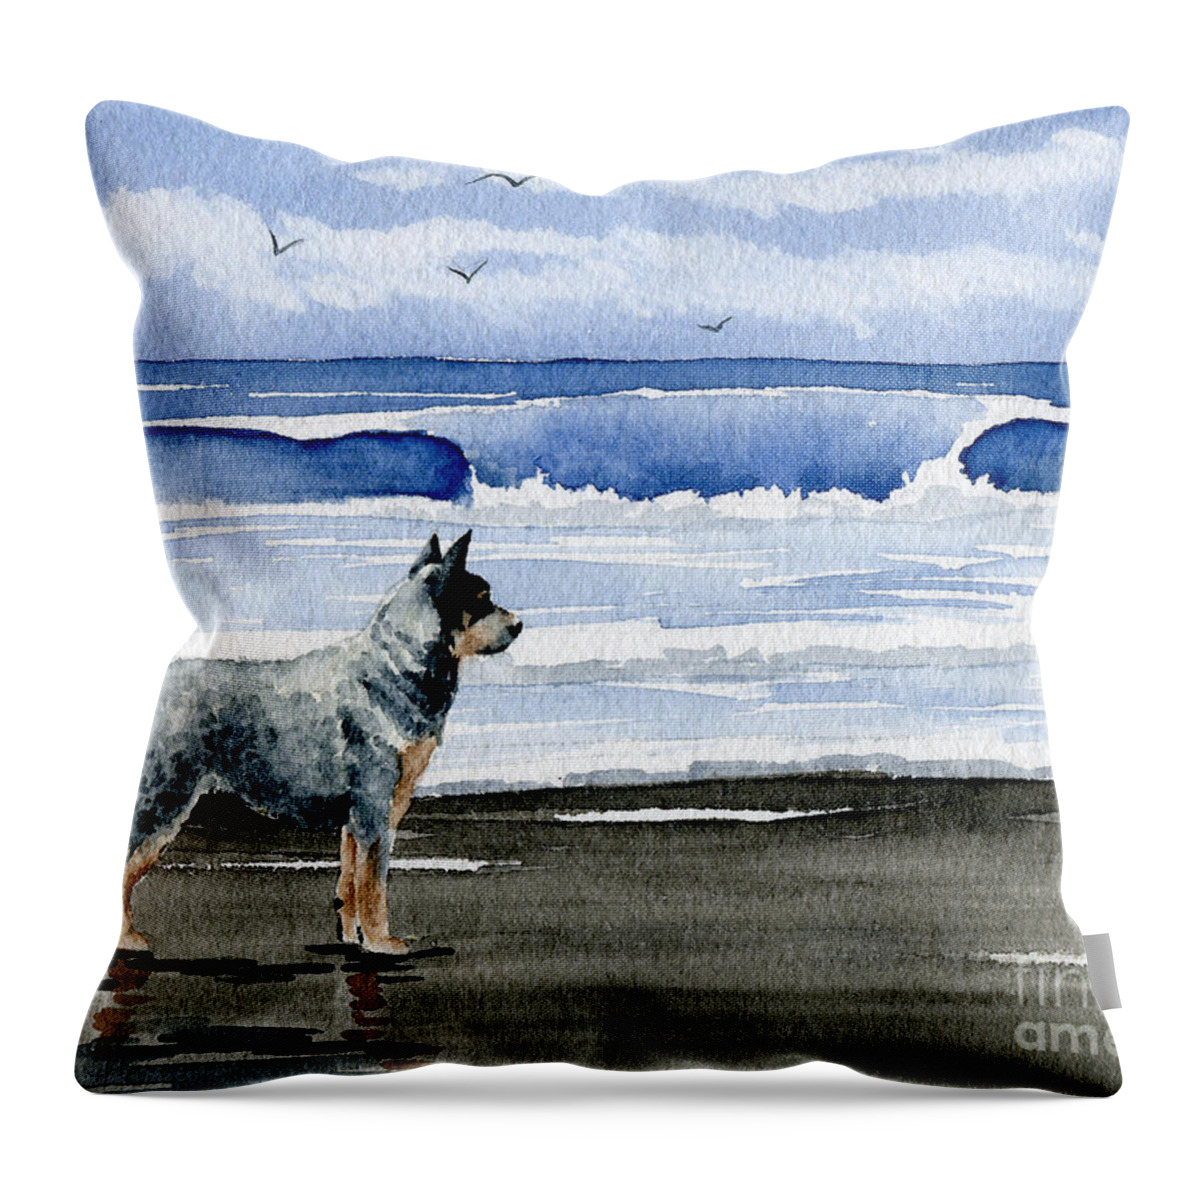 Australian Cattle Dog Throw Pillow featuring the painting Australian Cattle Dog At The Beach by David Rogers